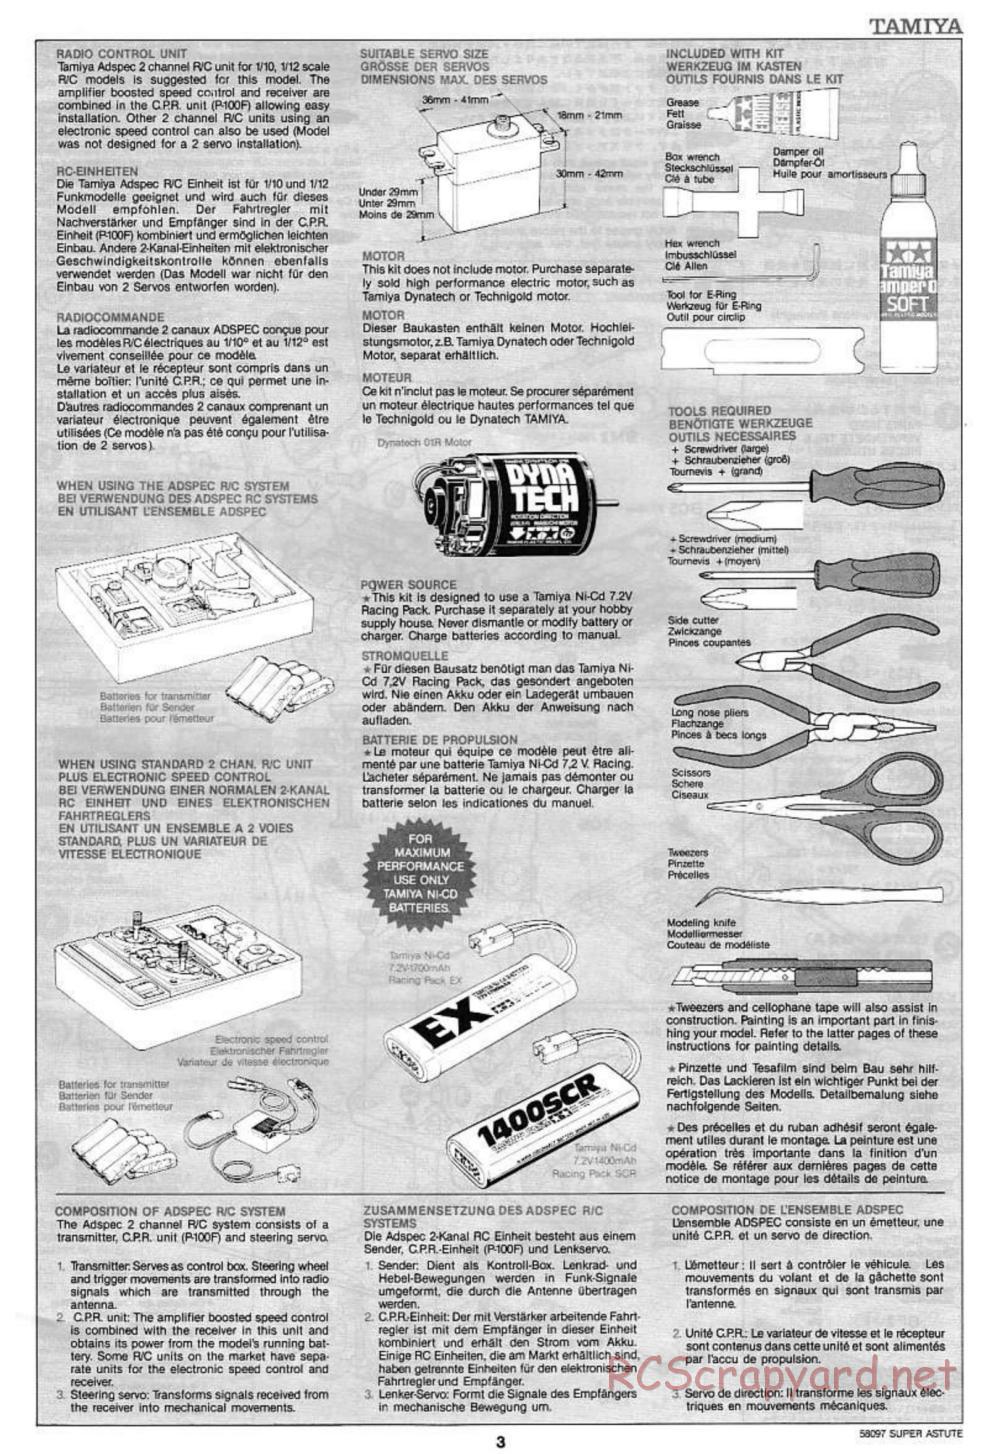 Tamiya - Super Astute - 58097 - Manual - Page 3